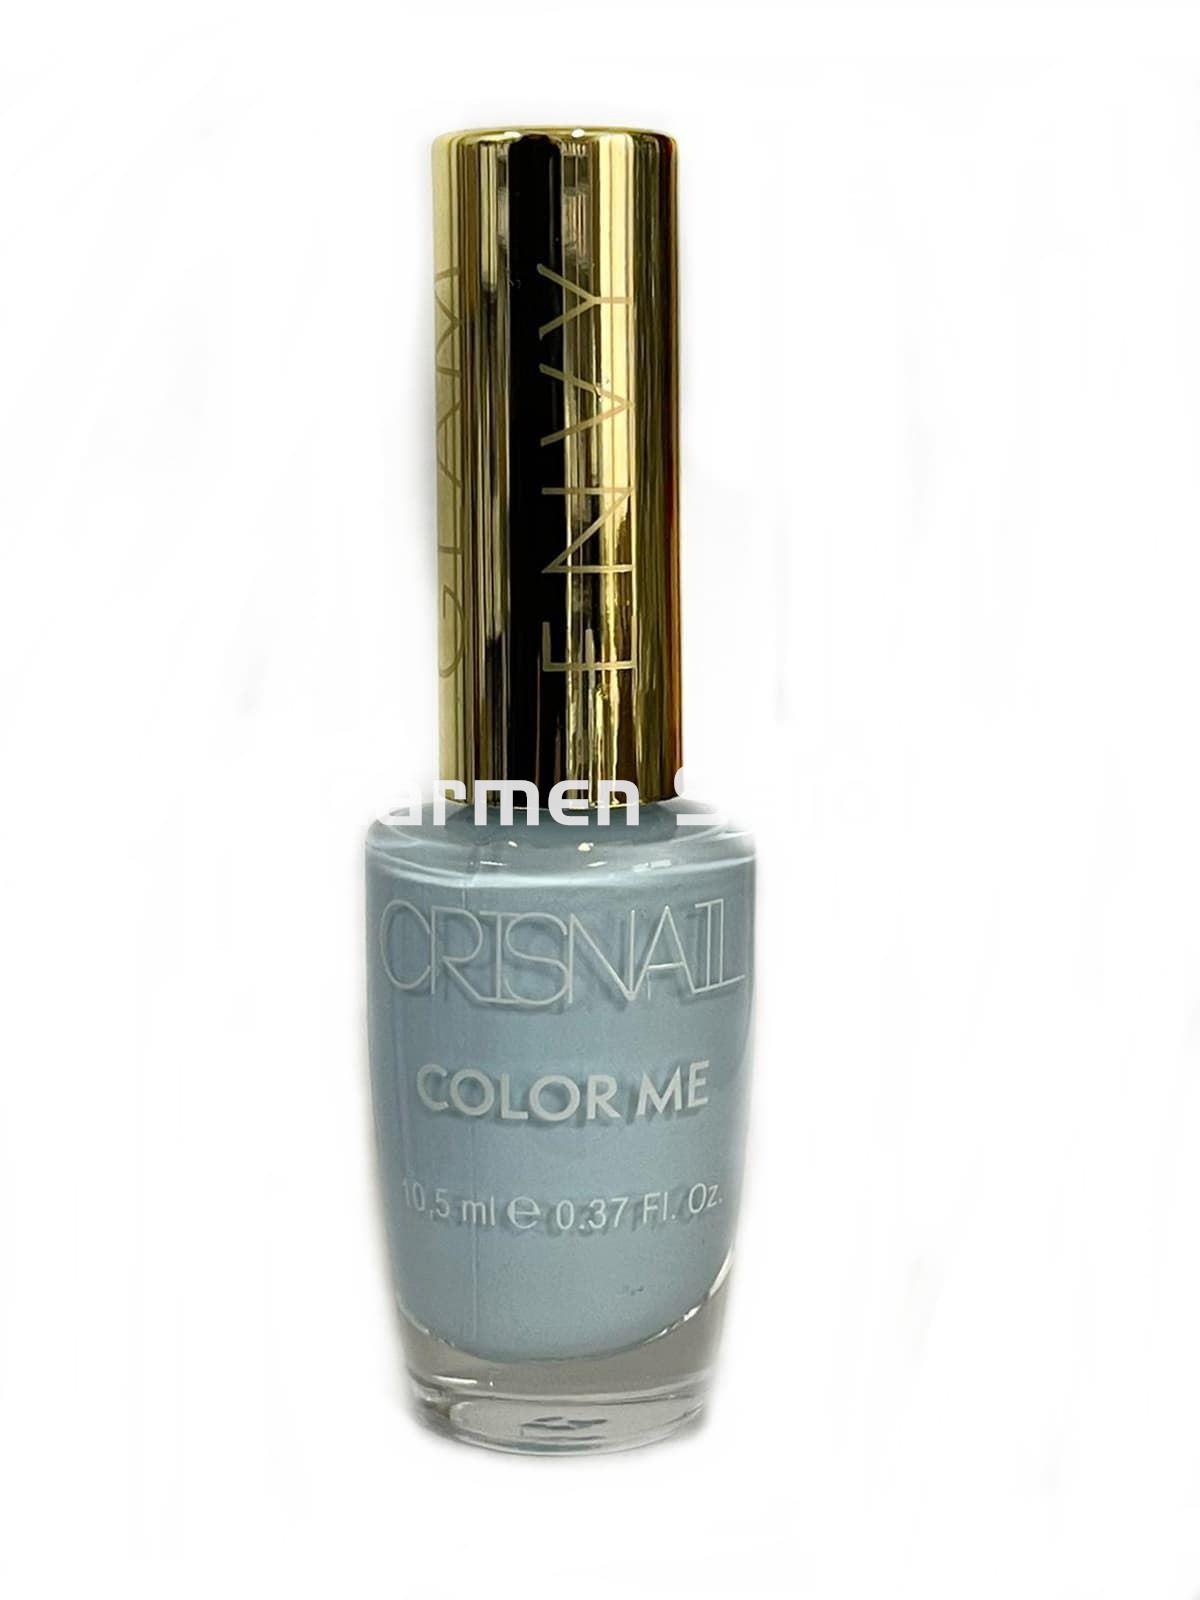 Crisnail Esmalte de Uñas Bleu Pastel Color Me - Imagen 1